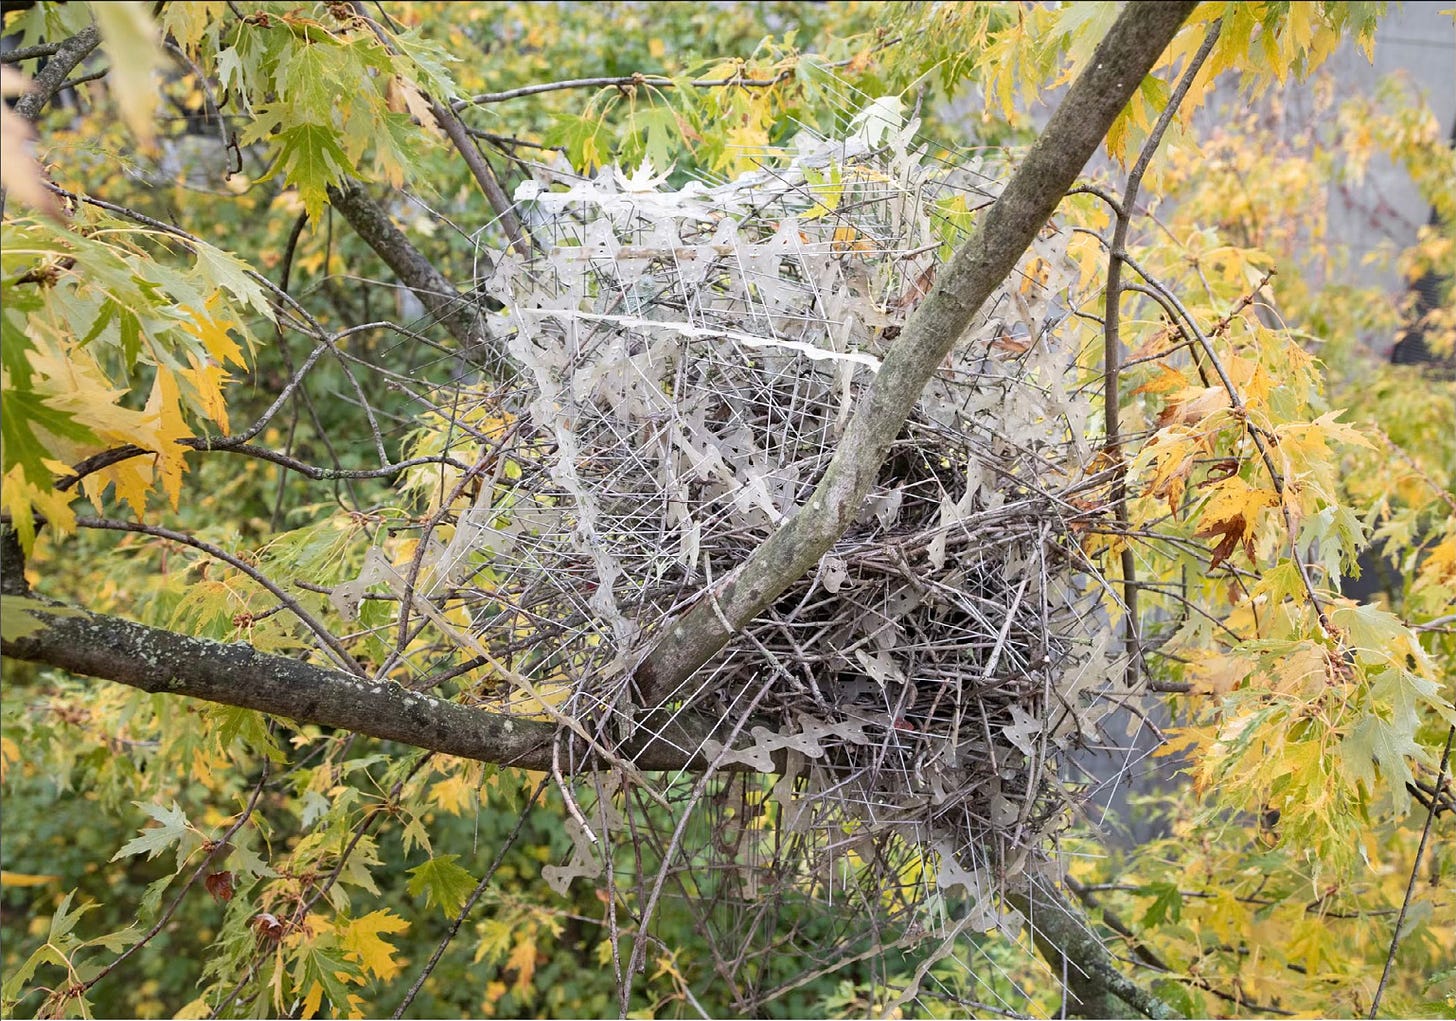 Magpie nest made of metal bird spikes